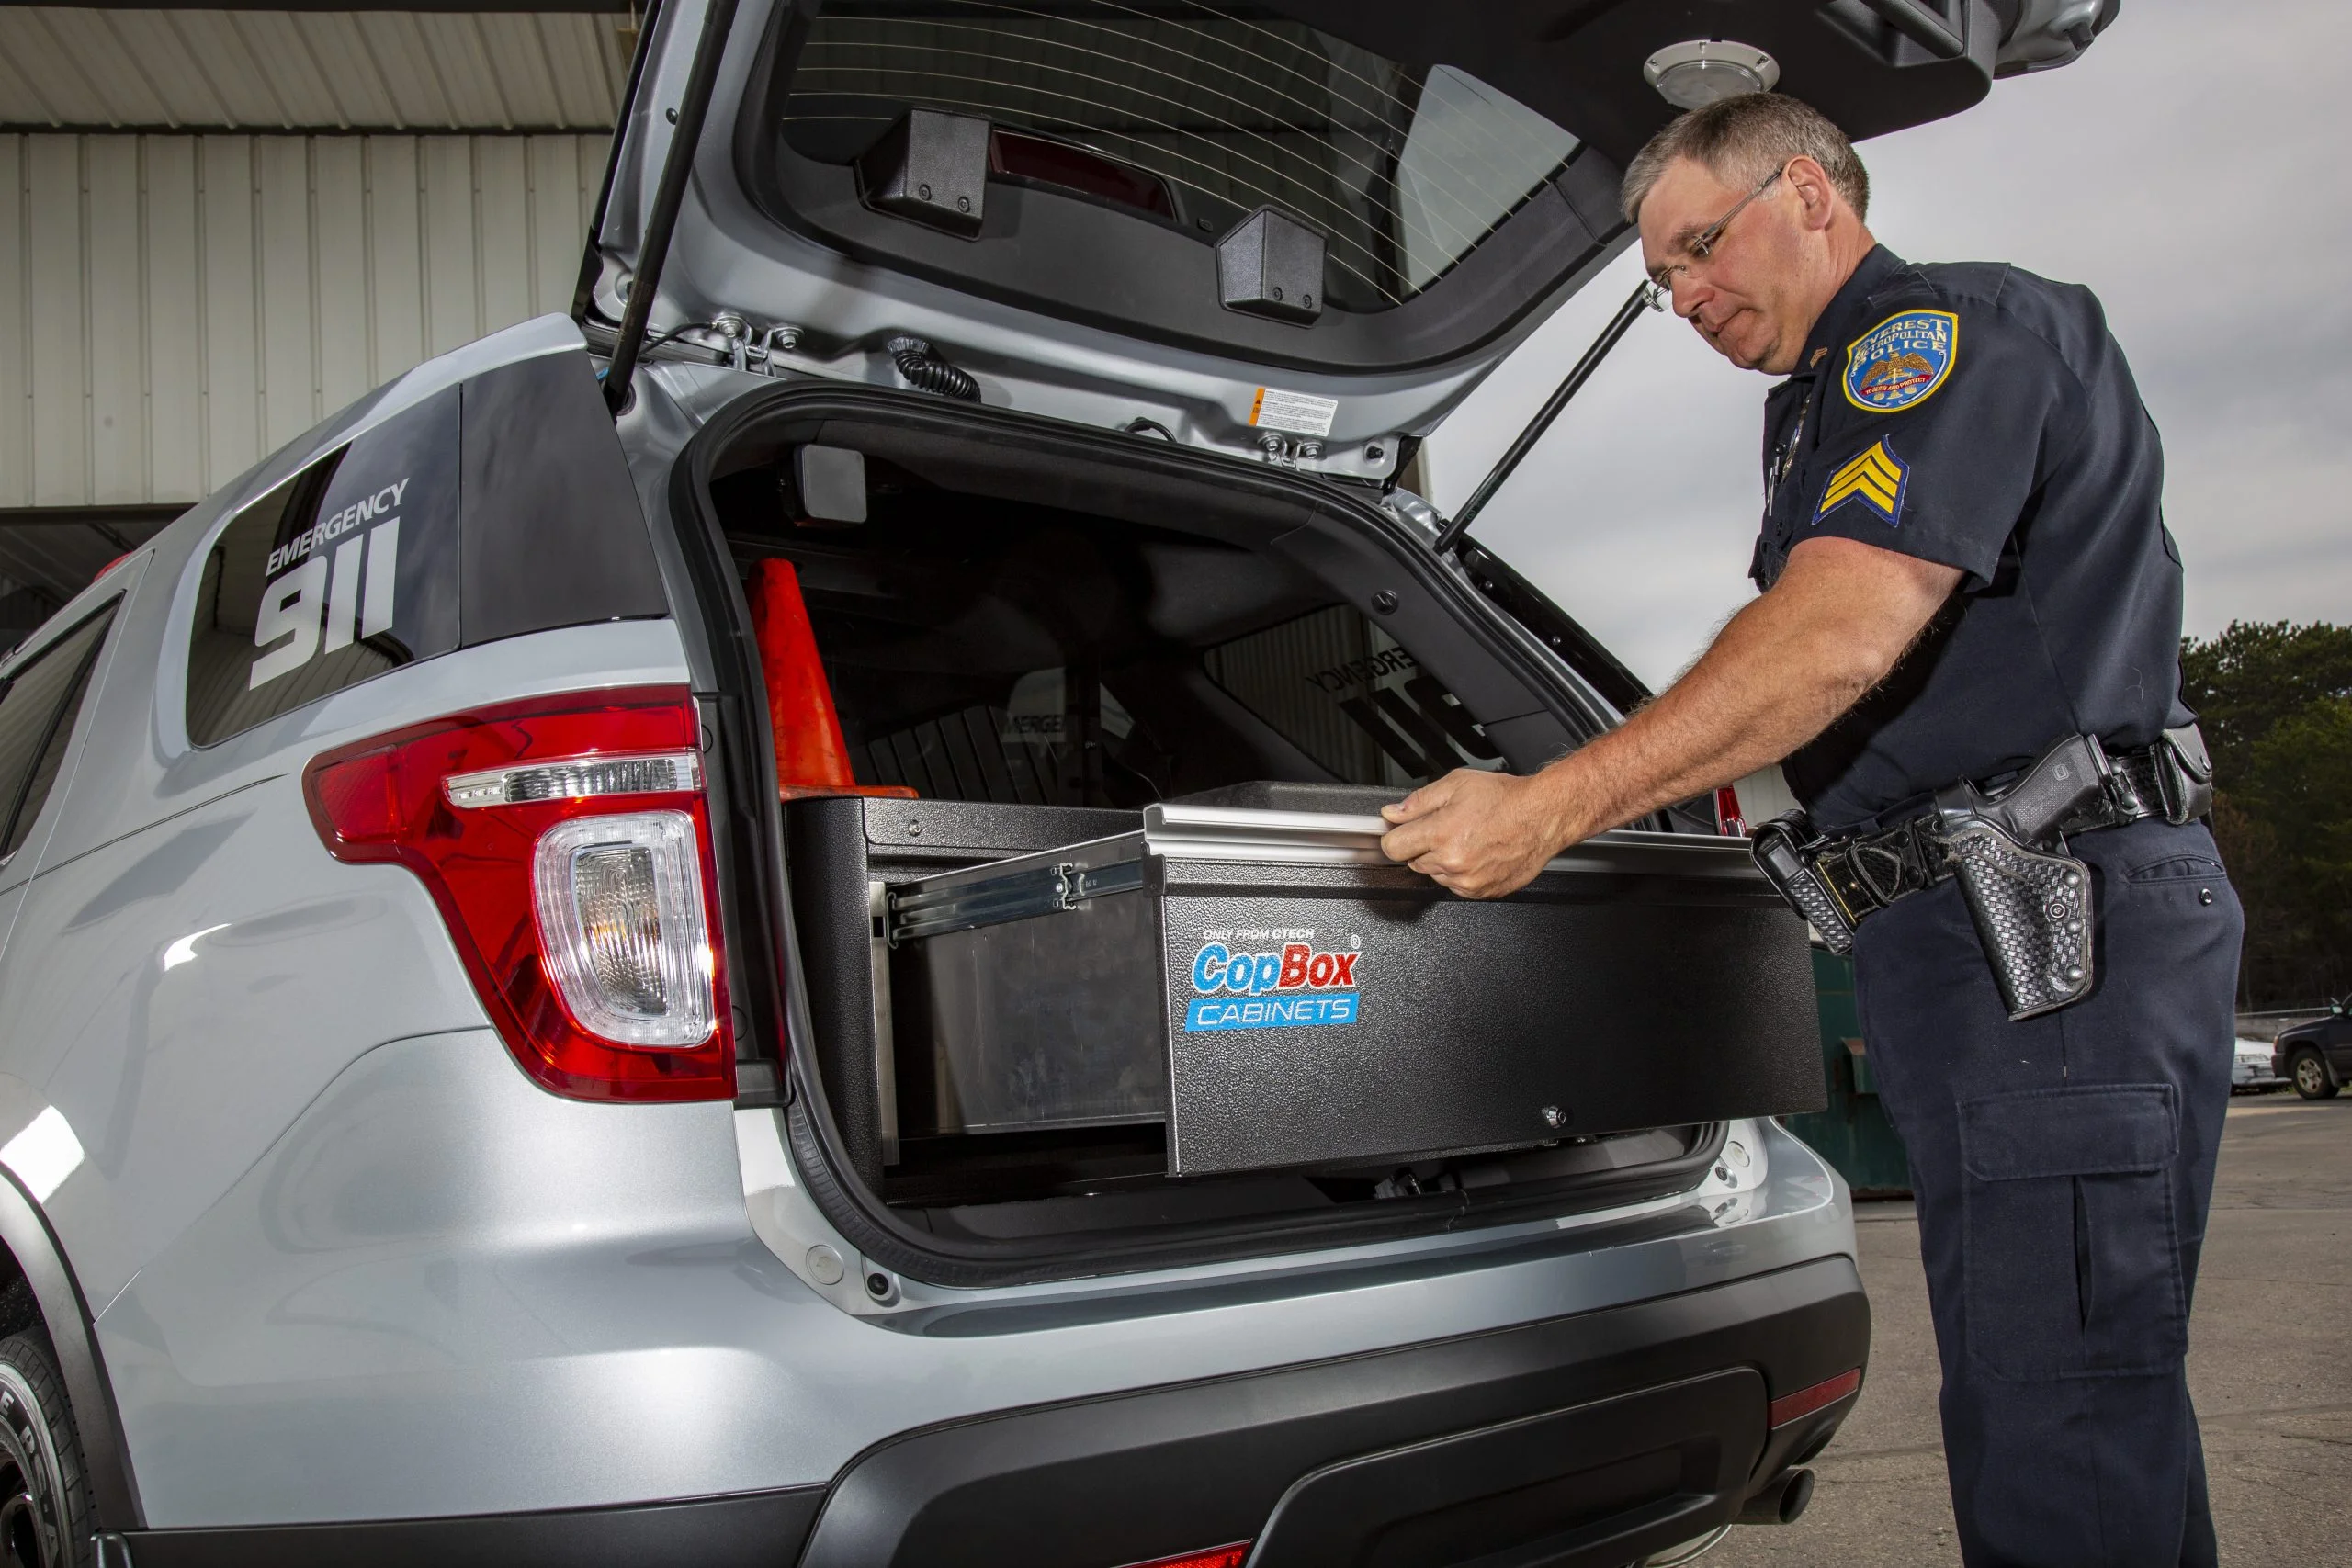 Blog - The Best Law Enforcement Vehicle Storage System